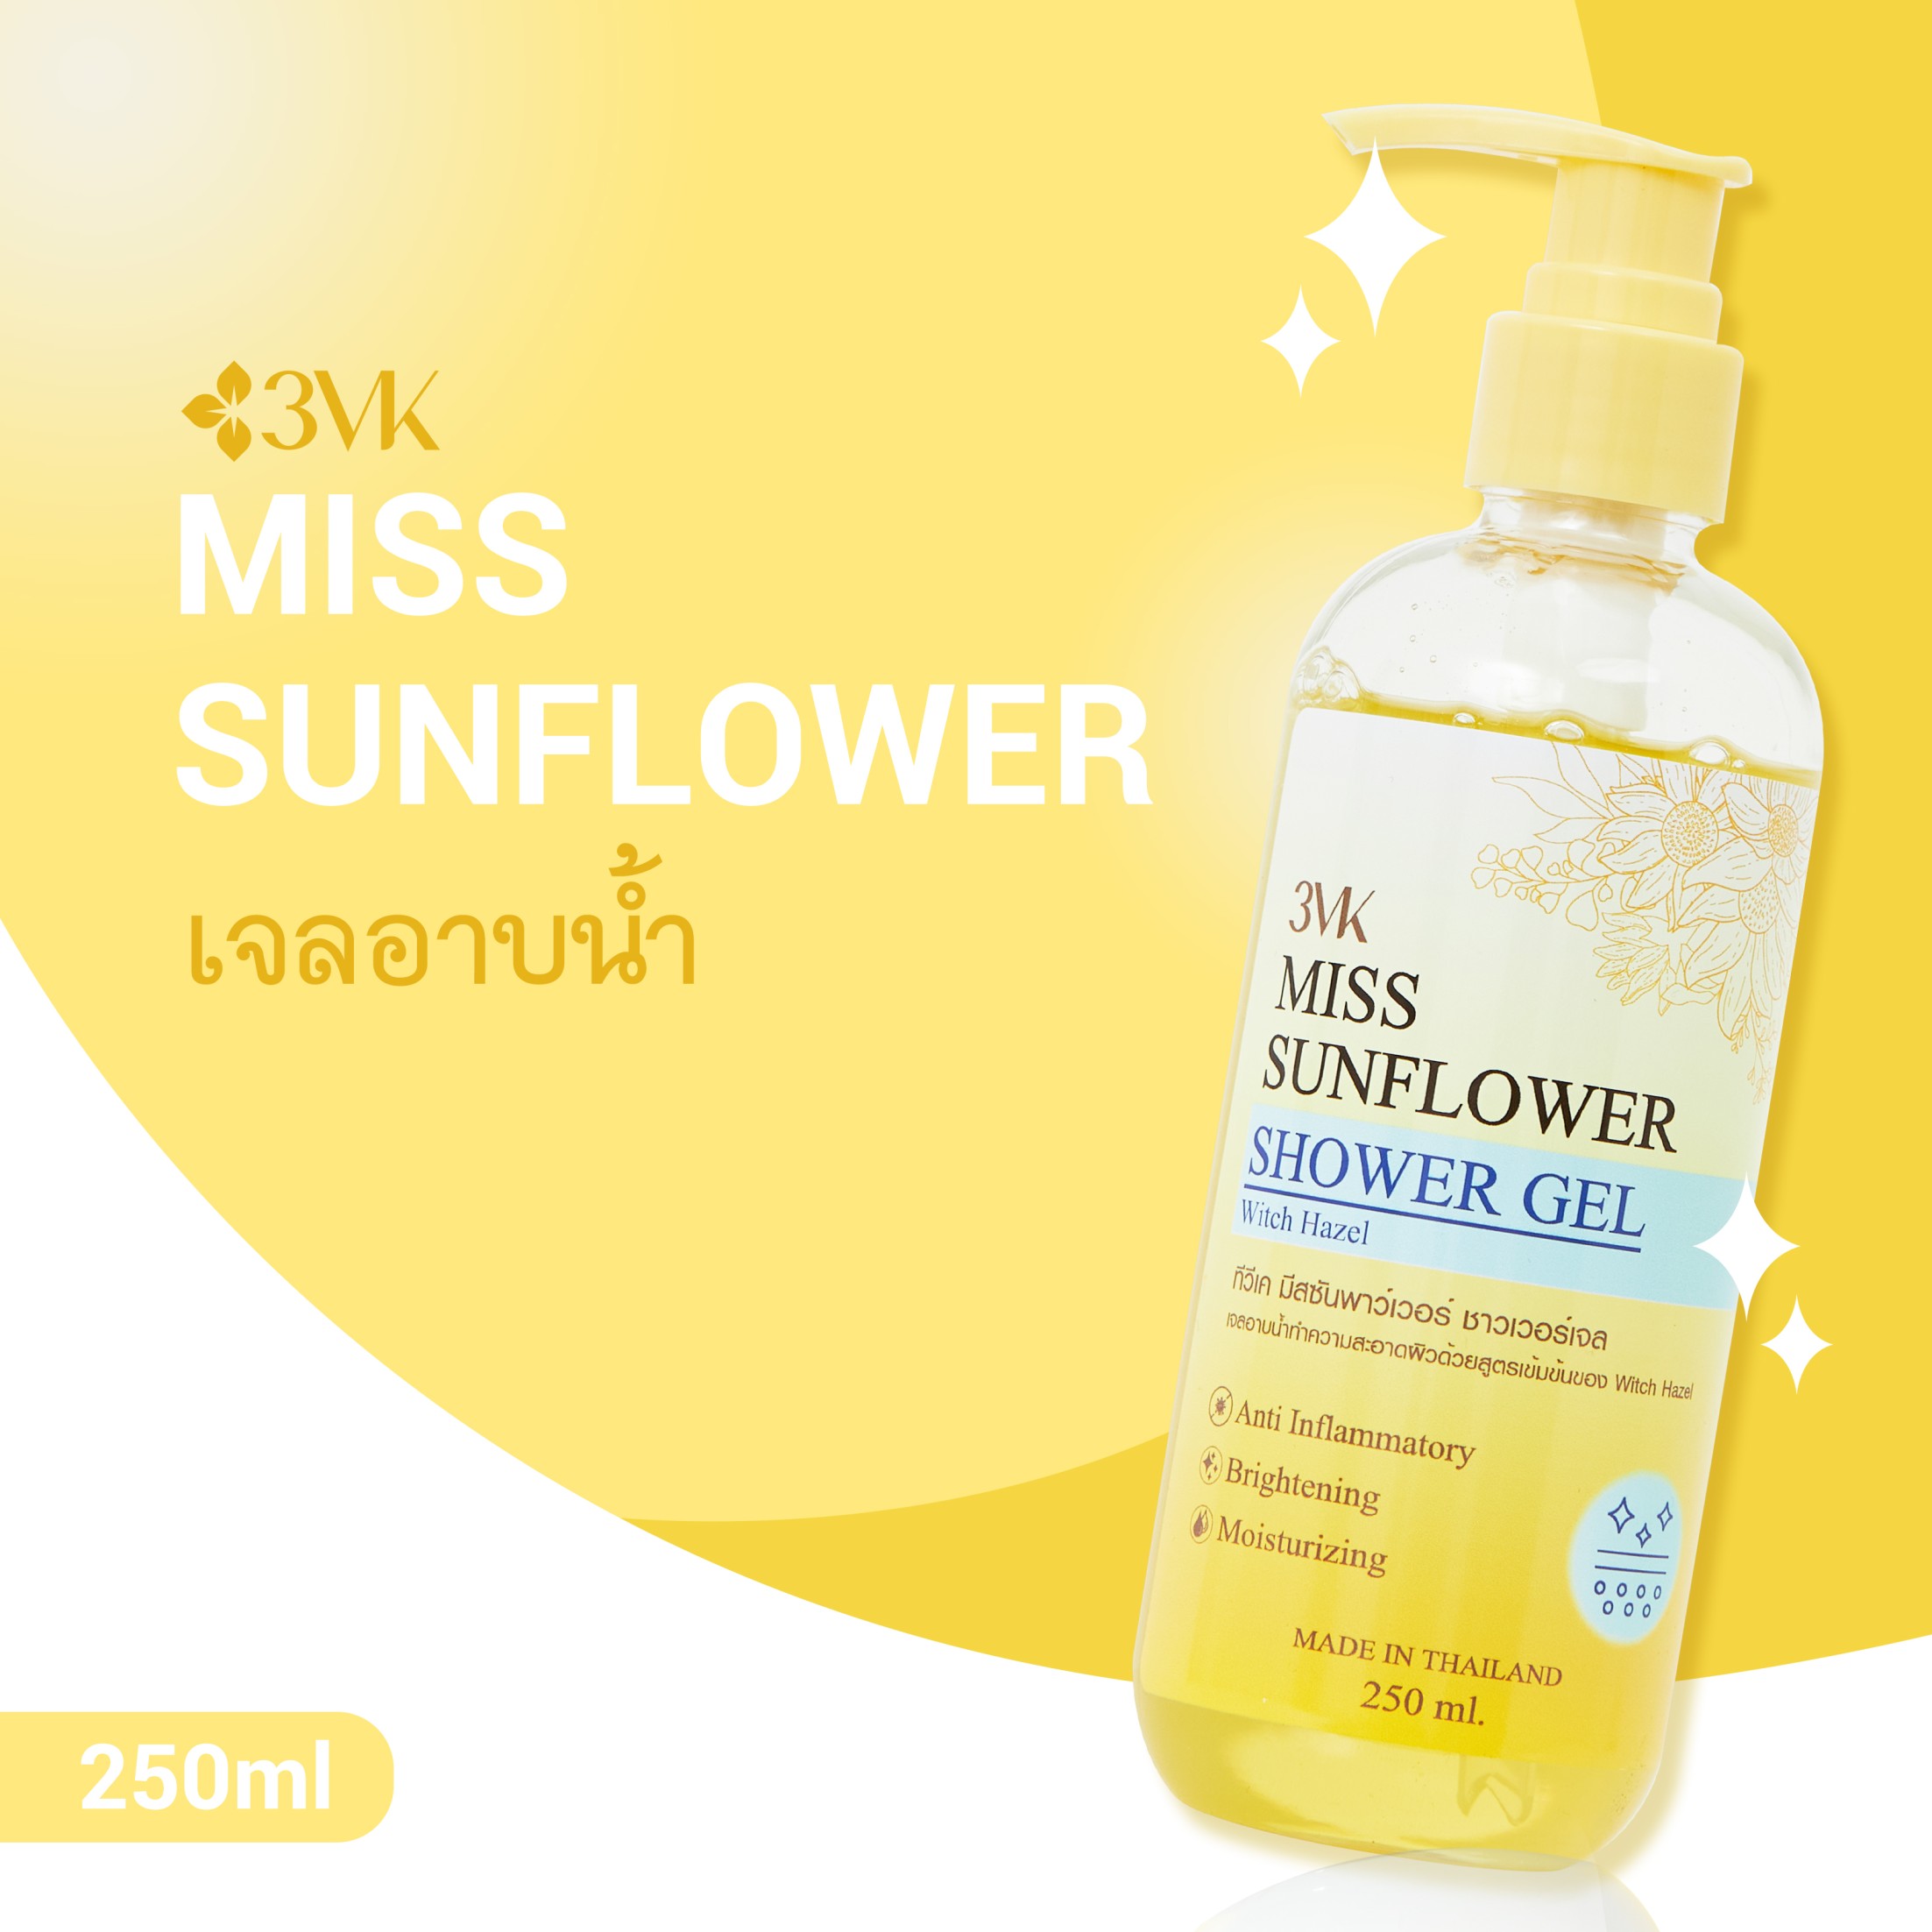 3VK Miss Sunflower Shower Gel 250ml